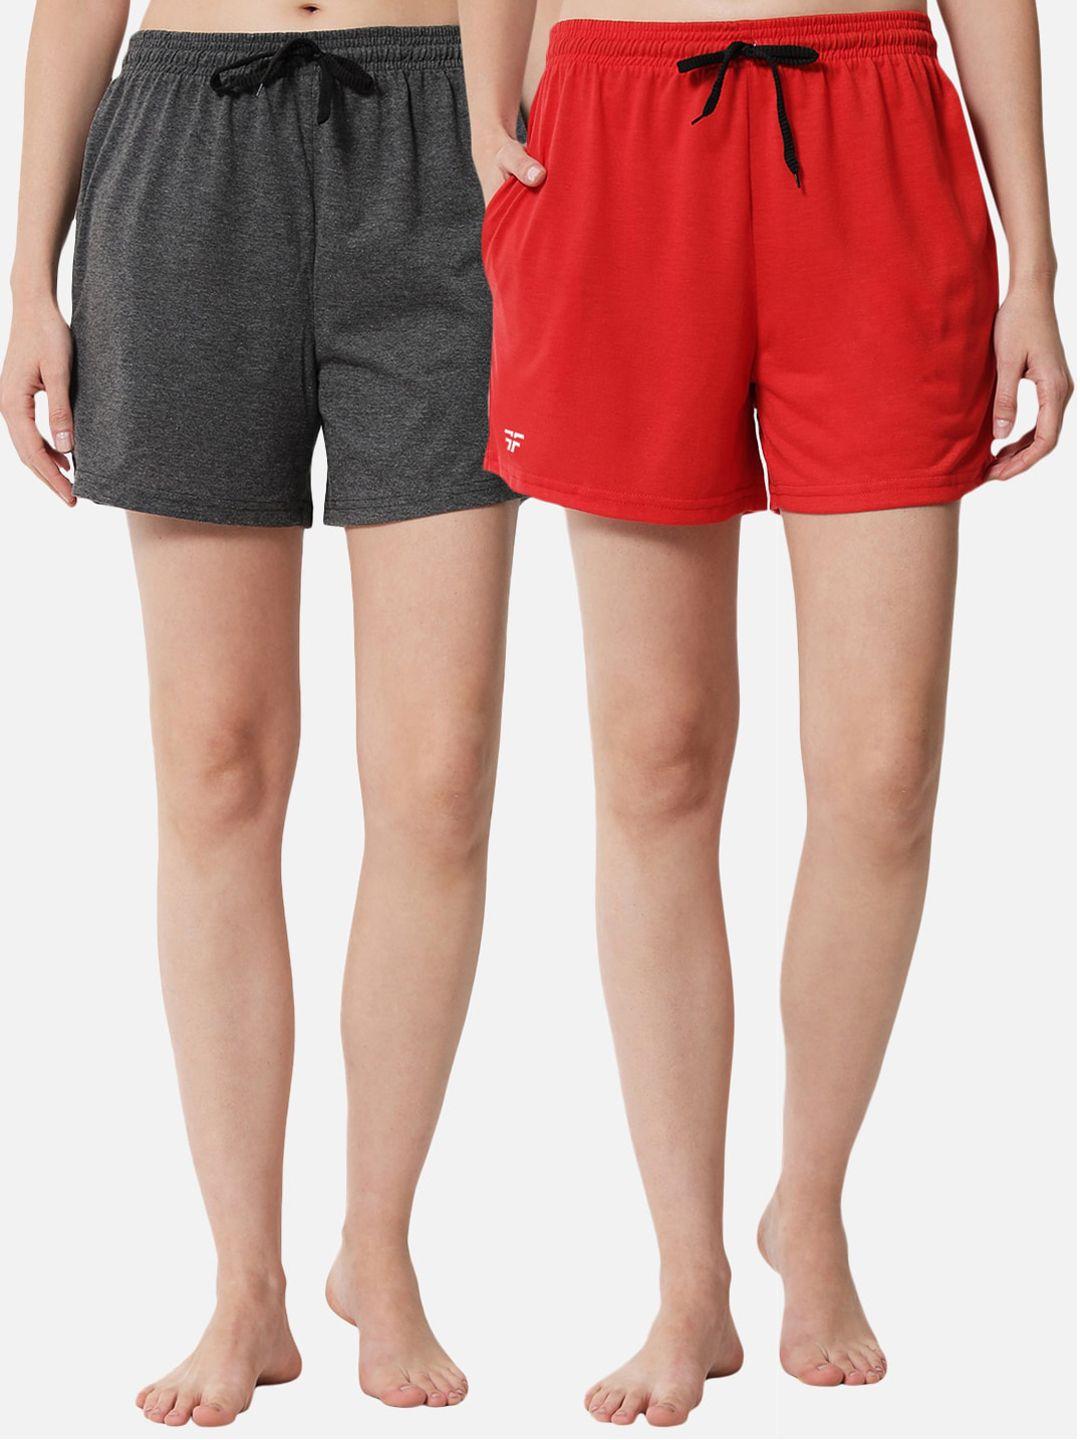 fflirtygo women charcoal shorts